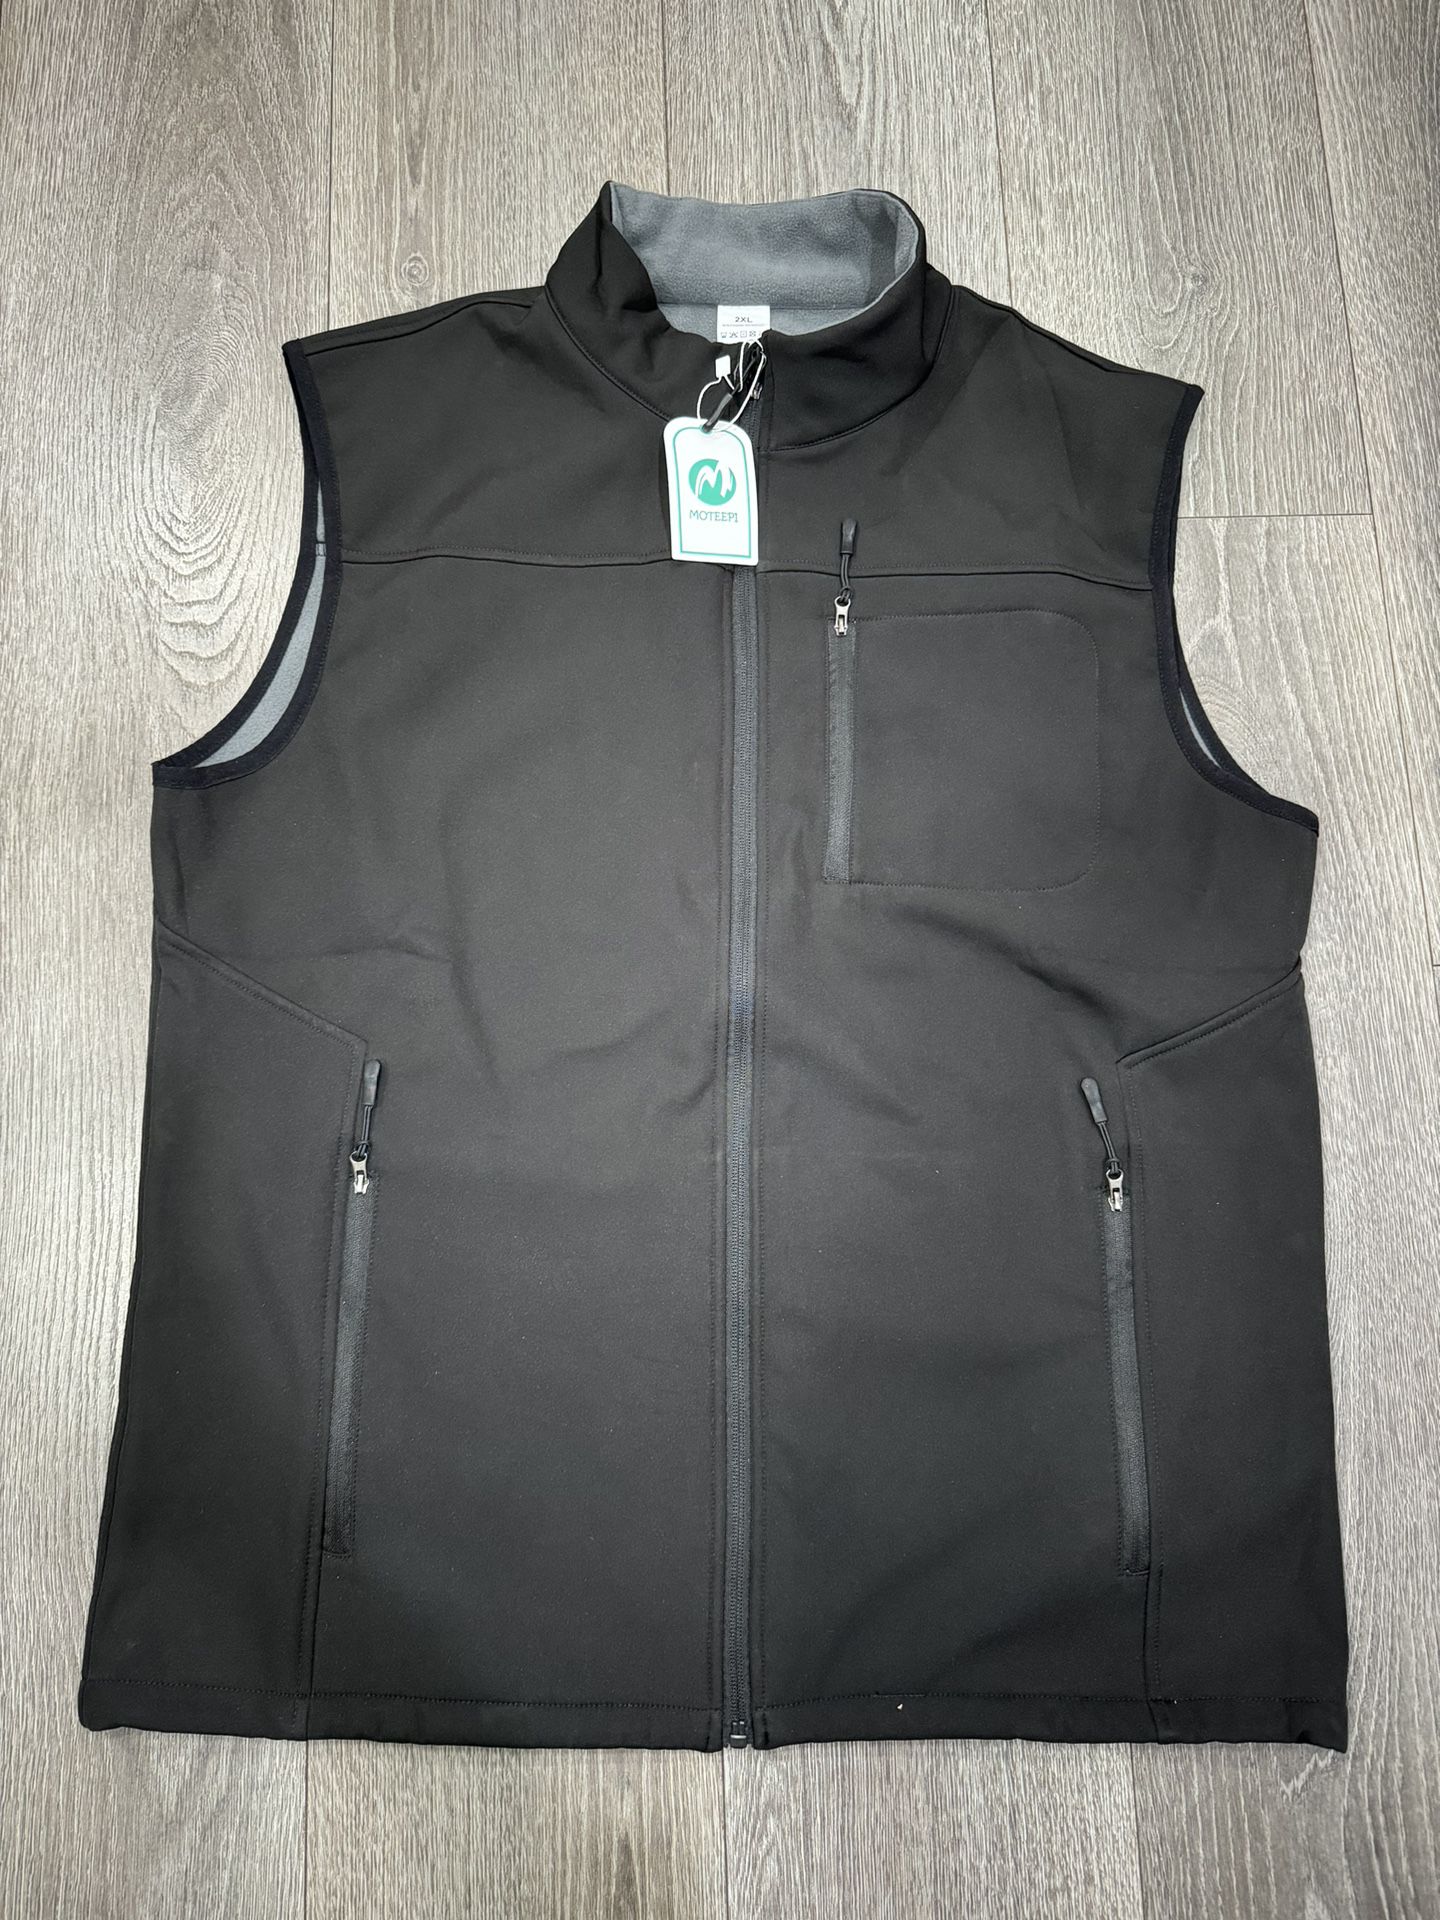 M MOTEEPI Mens Vests Outerwear Lightweight Fleece Sleeveless Jacket Full Zip Softshell Vest for Golf Hiking Running